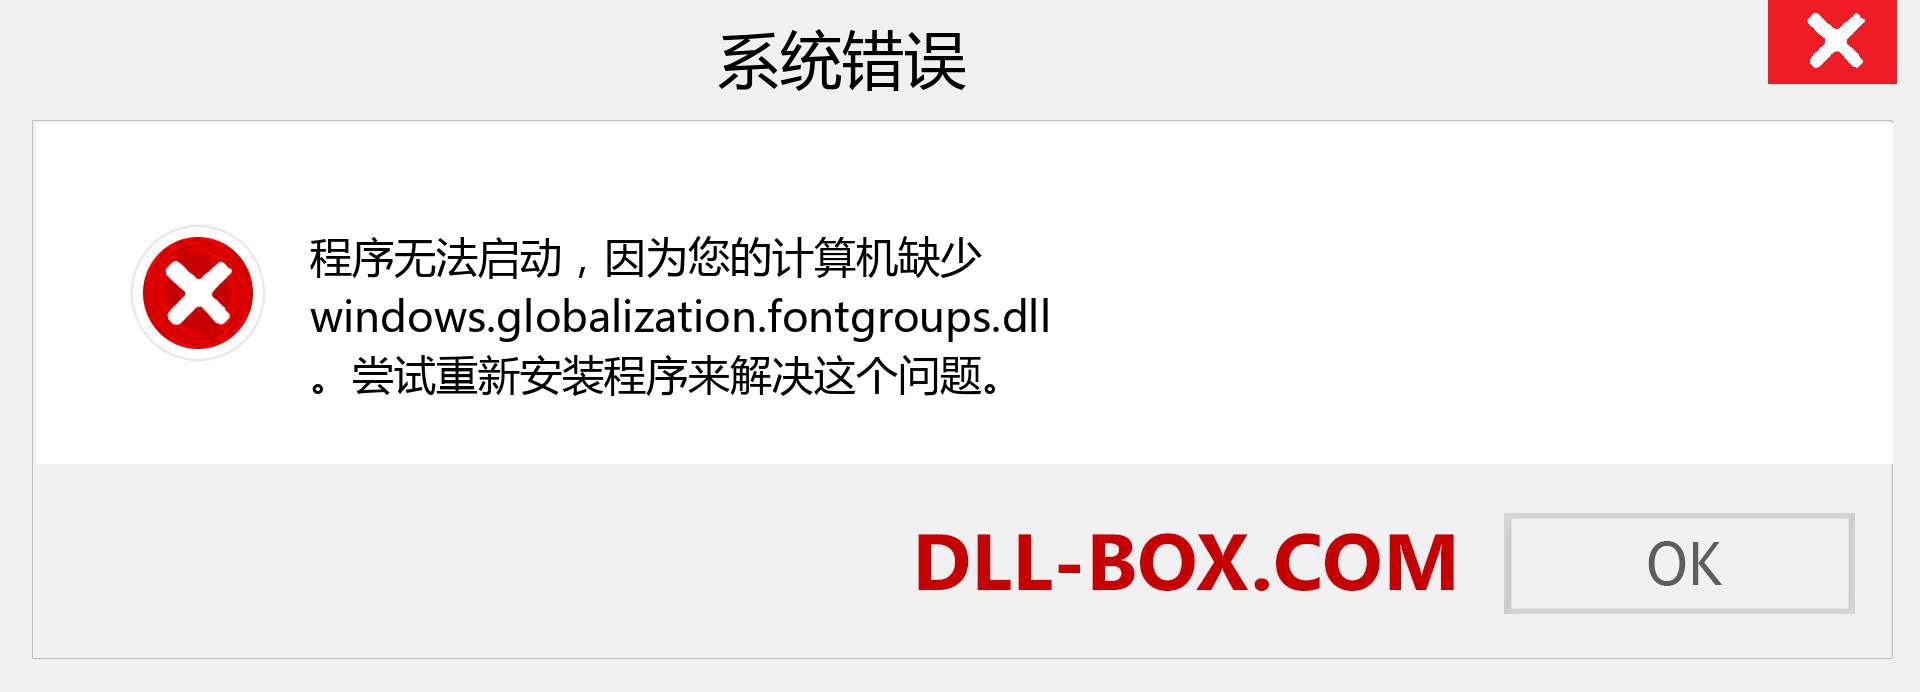 windows.globalization.fontgroups.dll 文件丢失？。 适用于 Windows 7、8、10 的下载 - 修复 Windows、照片、图像上的 windows.globalization.fontgroups dll 丢失错误